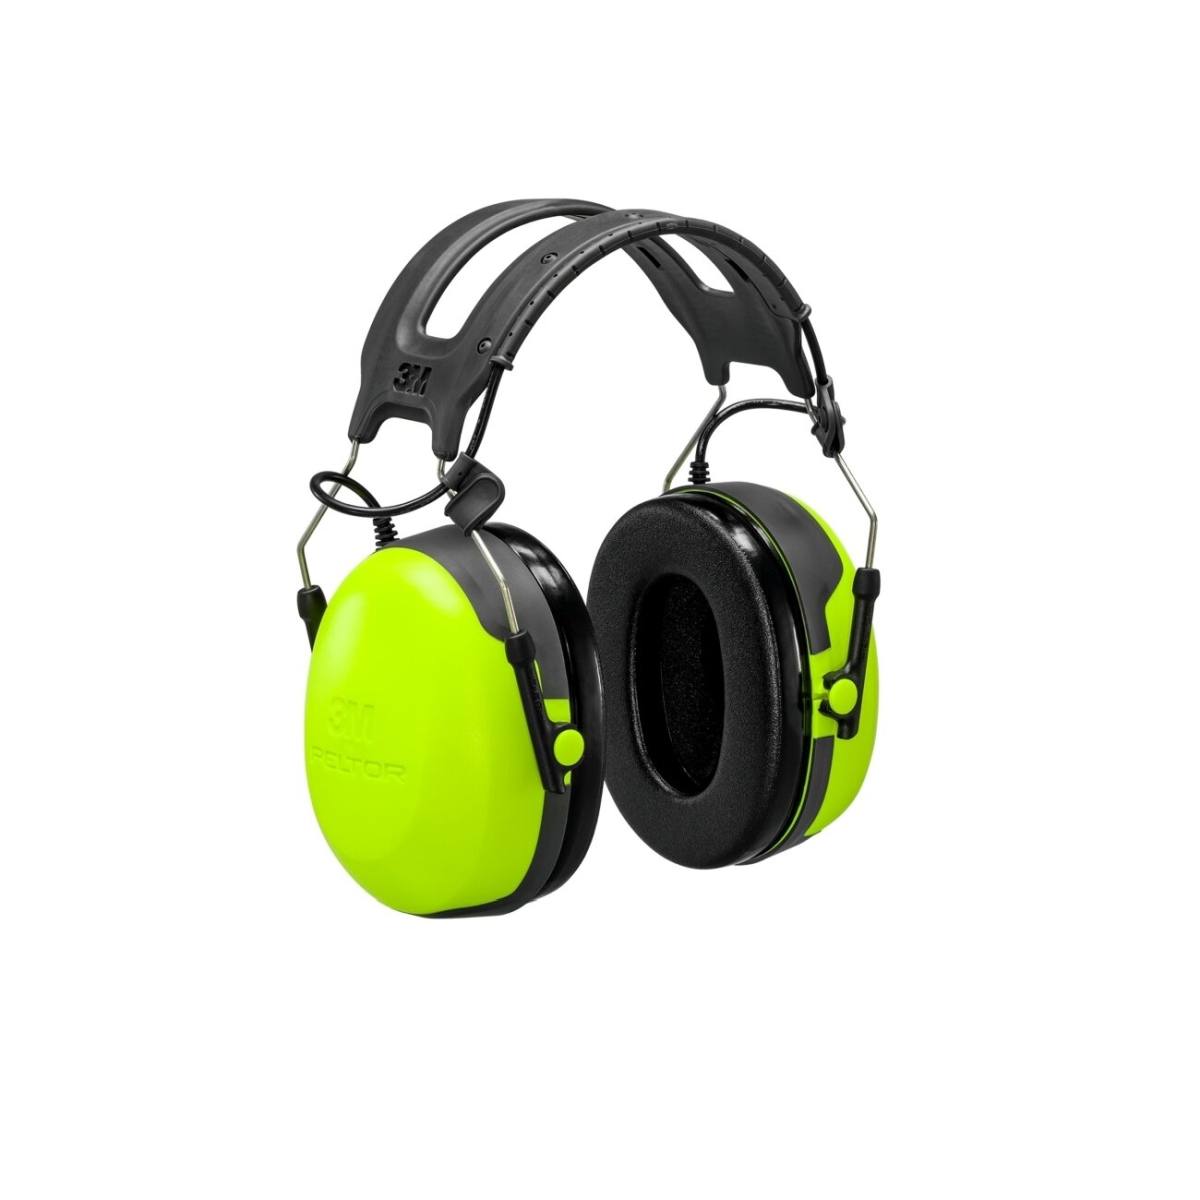 3M PELTOR Protection auditive CH-3, Listen-Only, serre-tête, jaune, HT52A-112